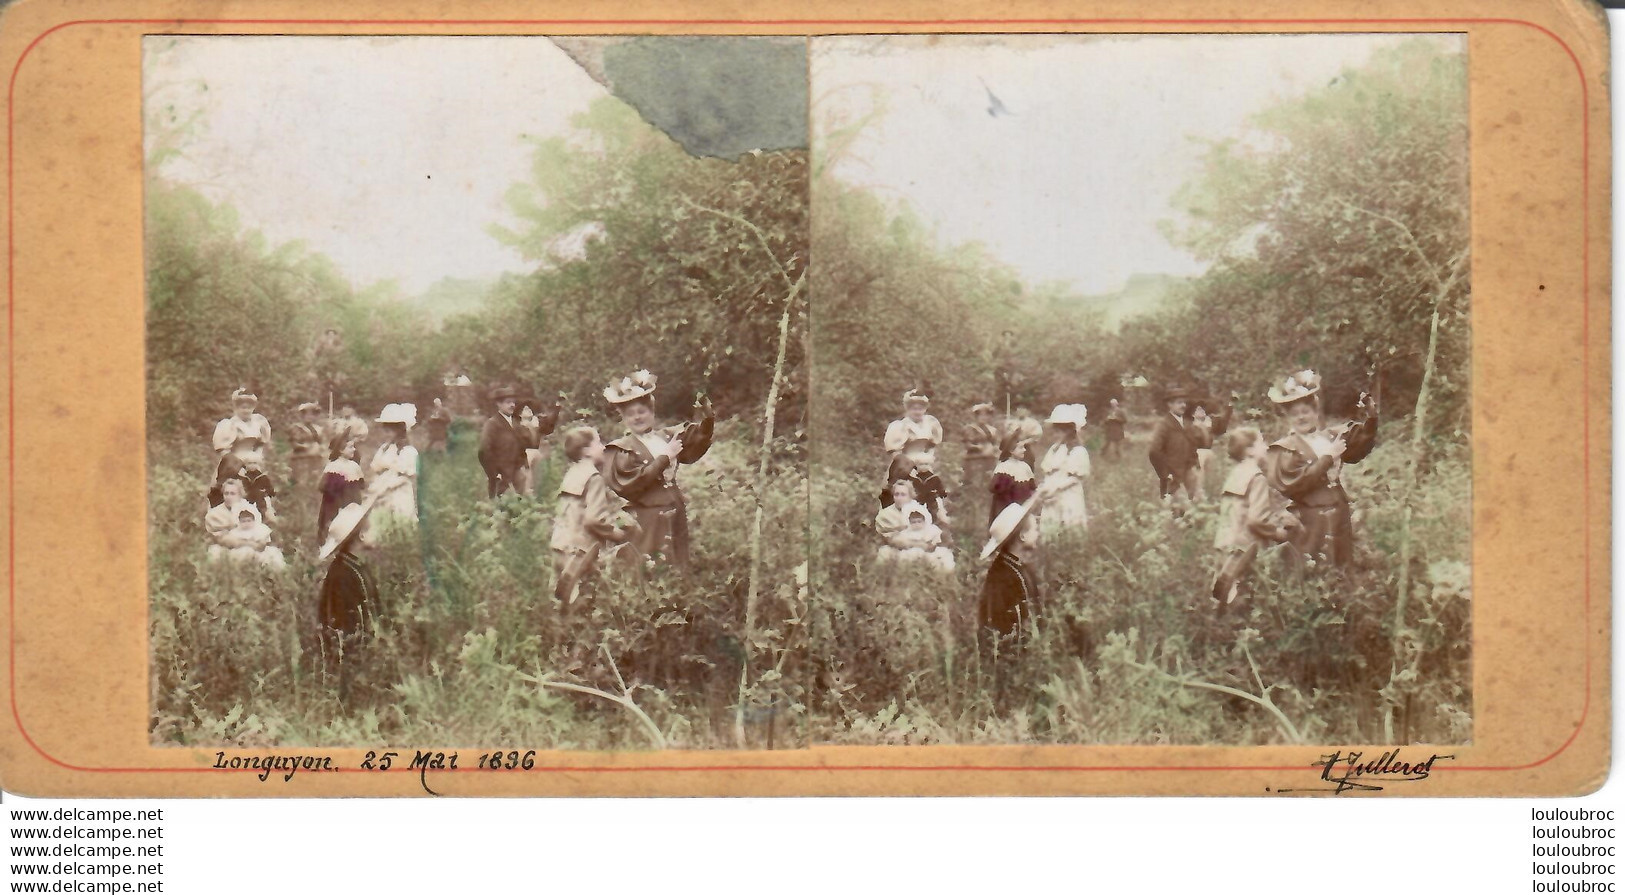 LONGUYON 1896 PHOTO STEREOSCOPIQUE - Stereoscopic